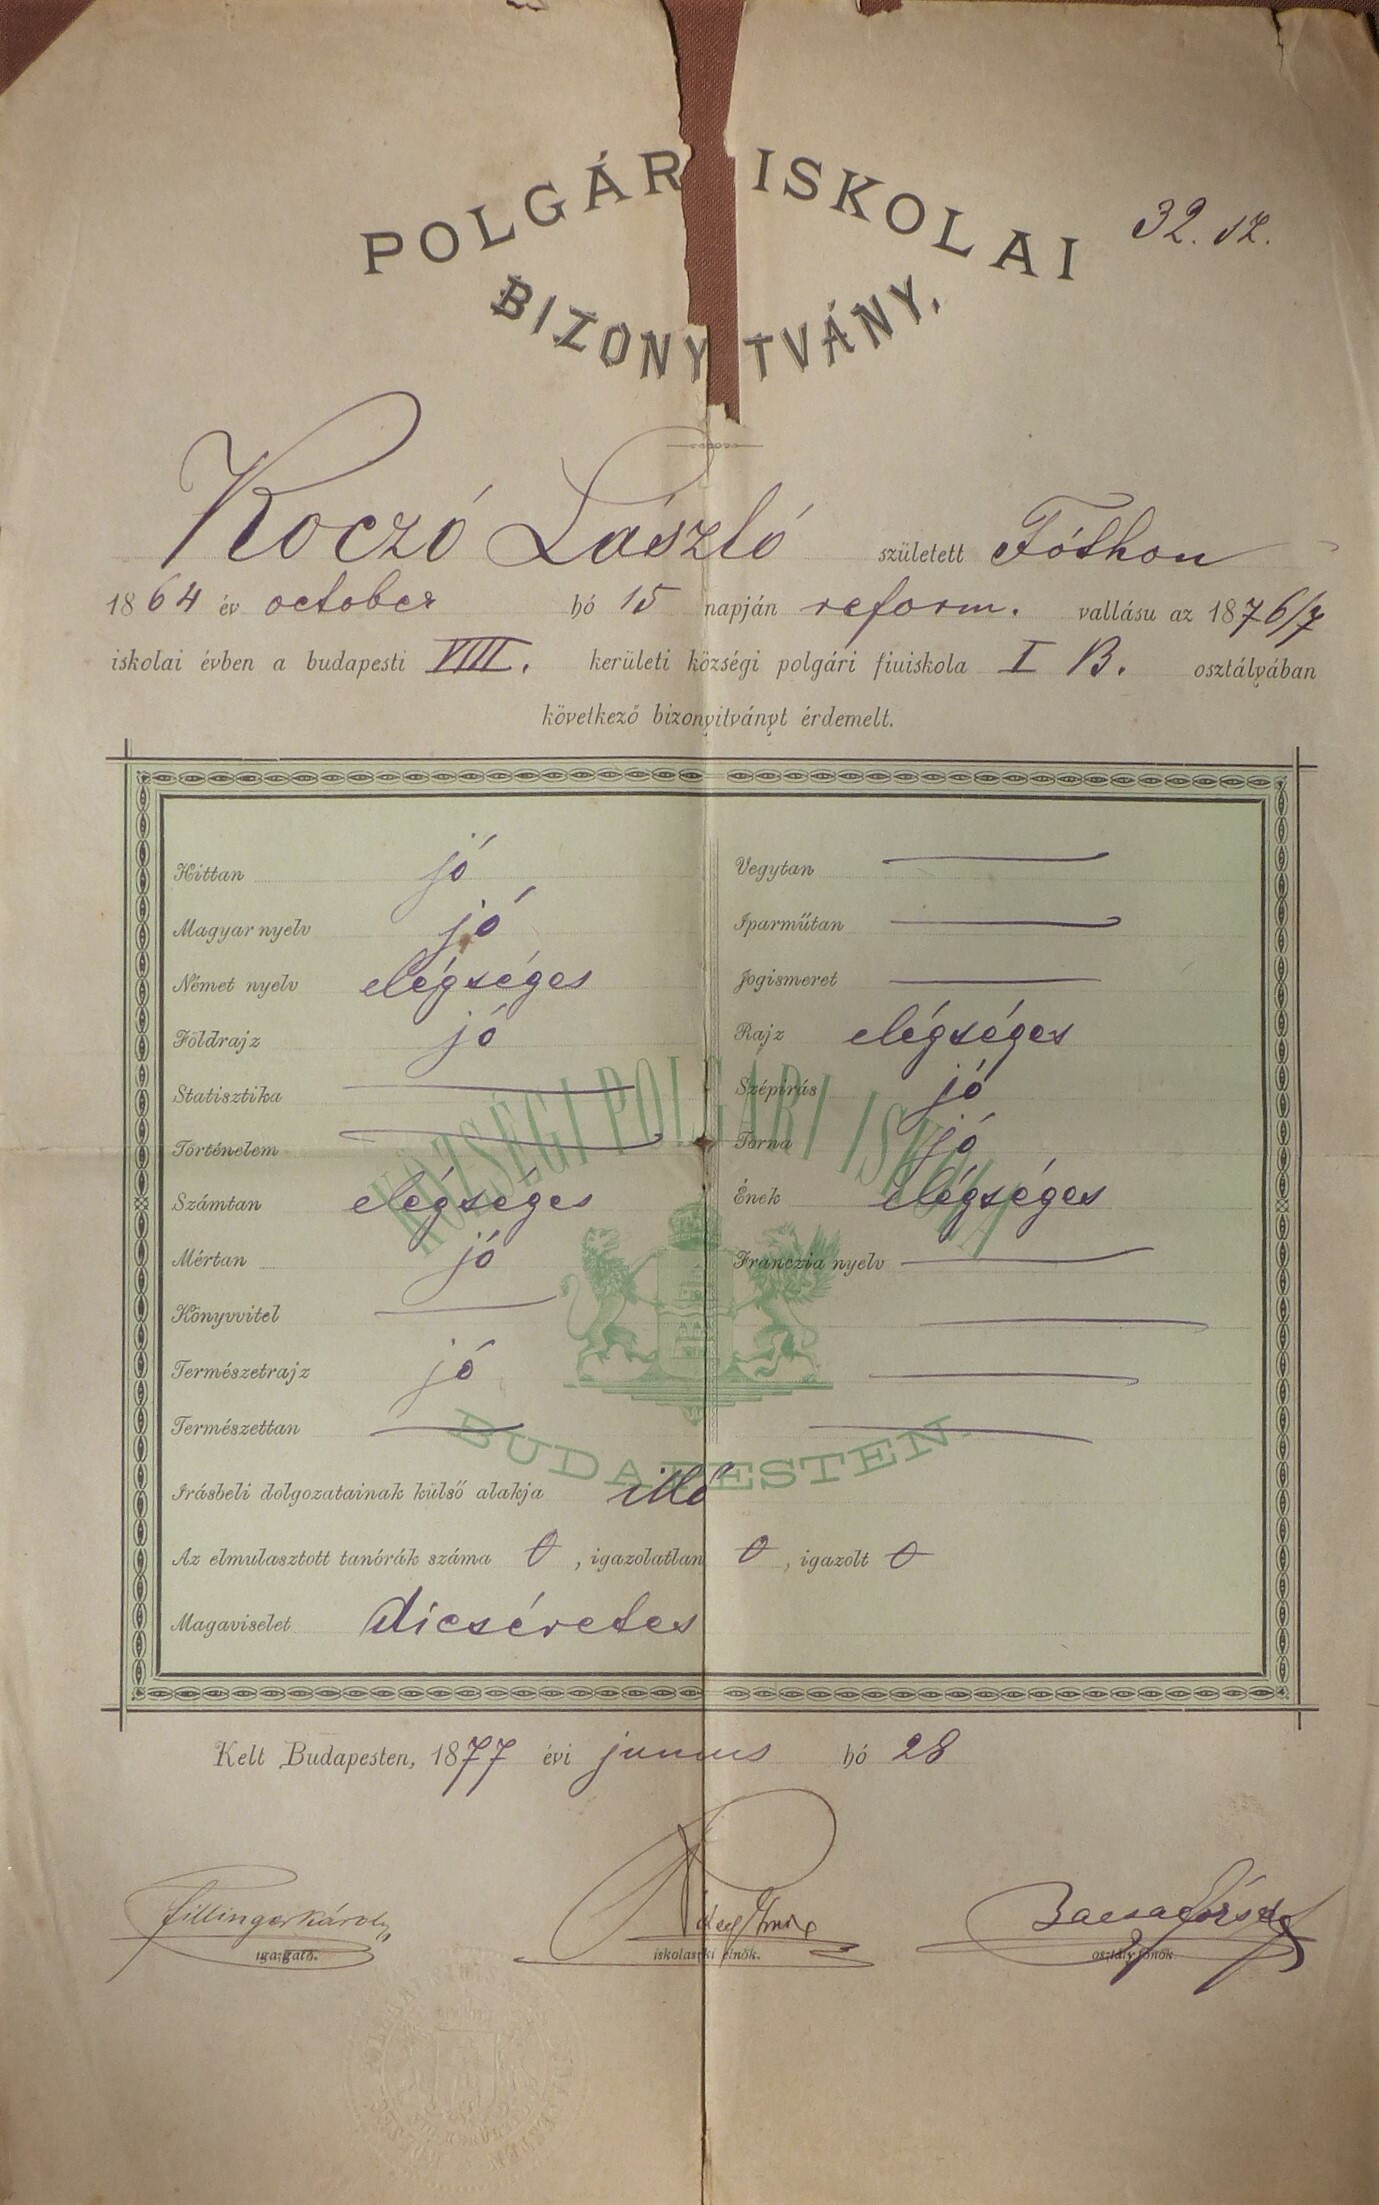 Polgári fiúiskolai bizonyítvány 1877 (Tapolcai Városi Múzeum CC BY-NC-SA)